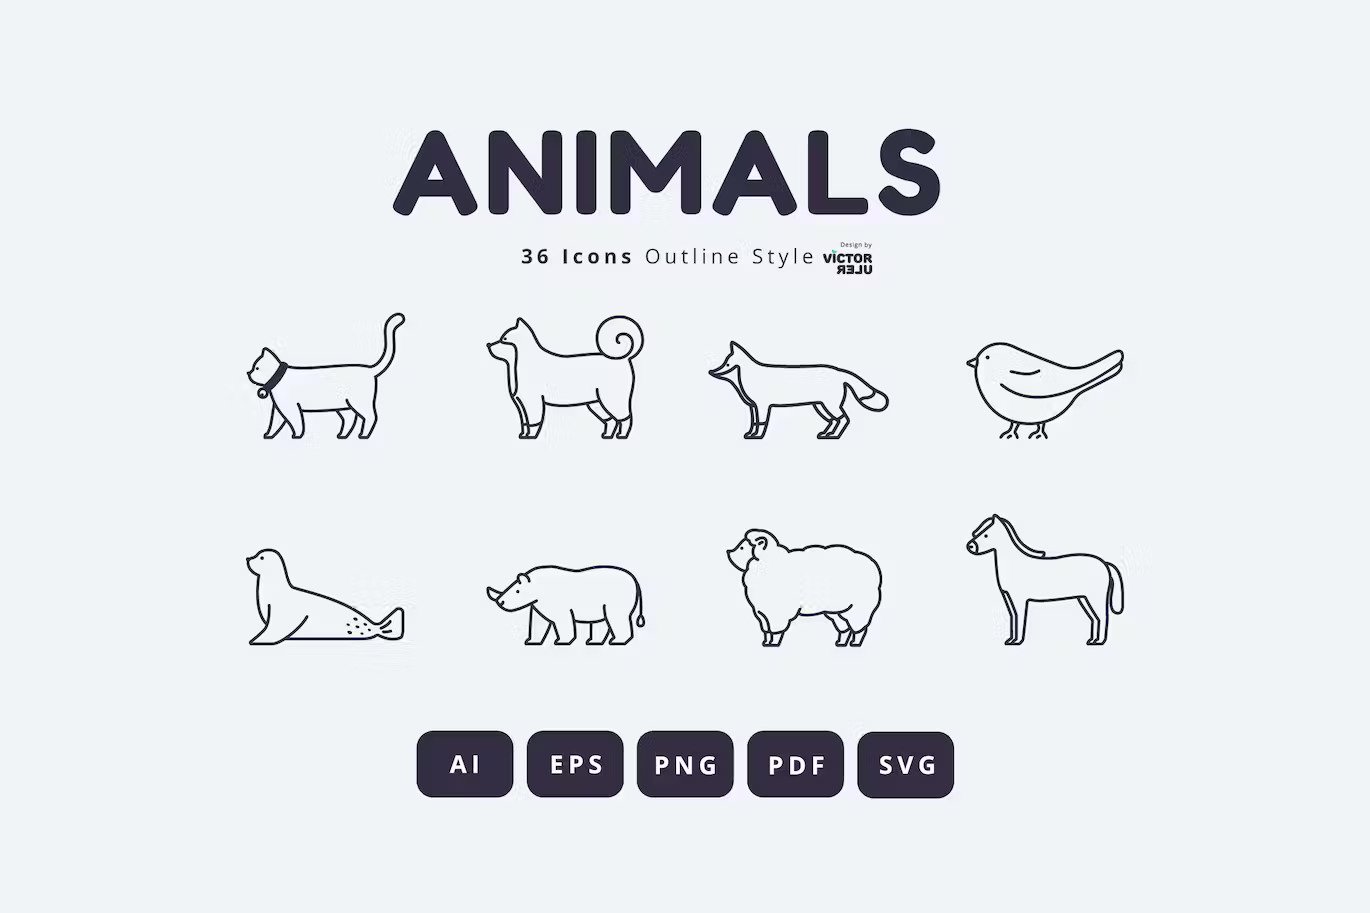 A set of potline style animal icons